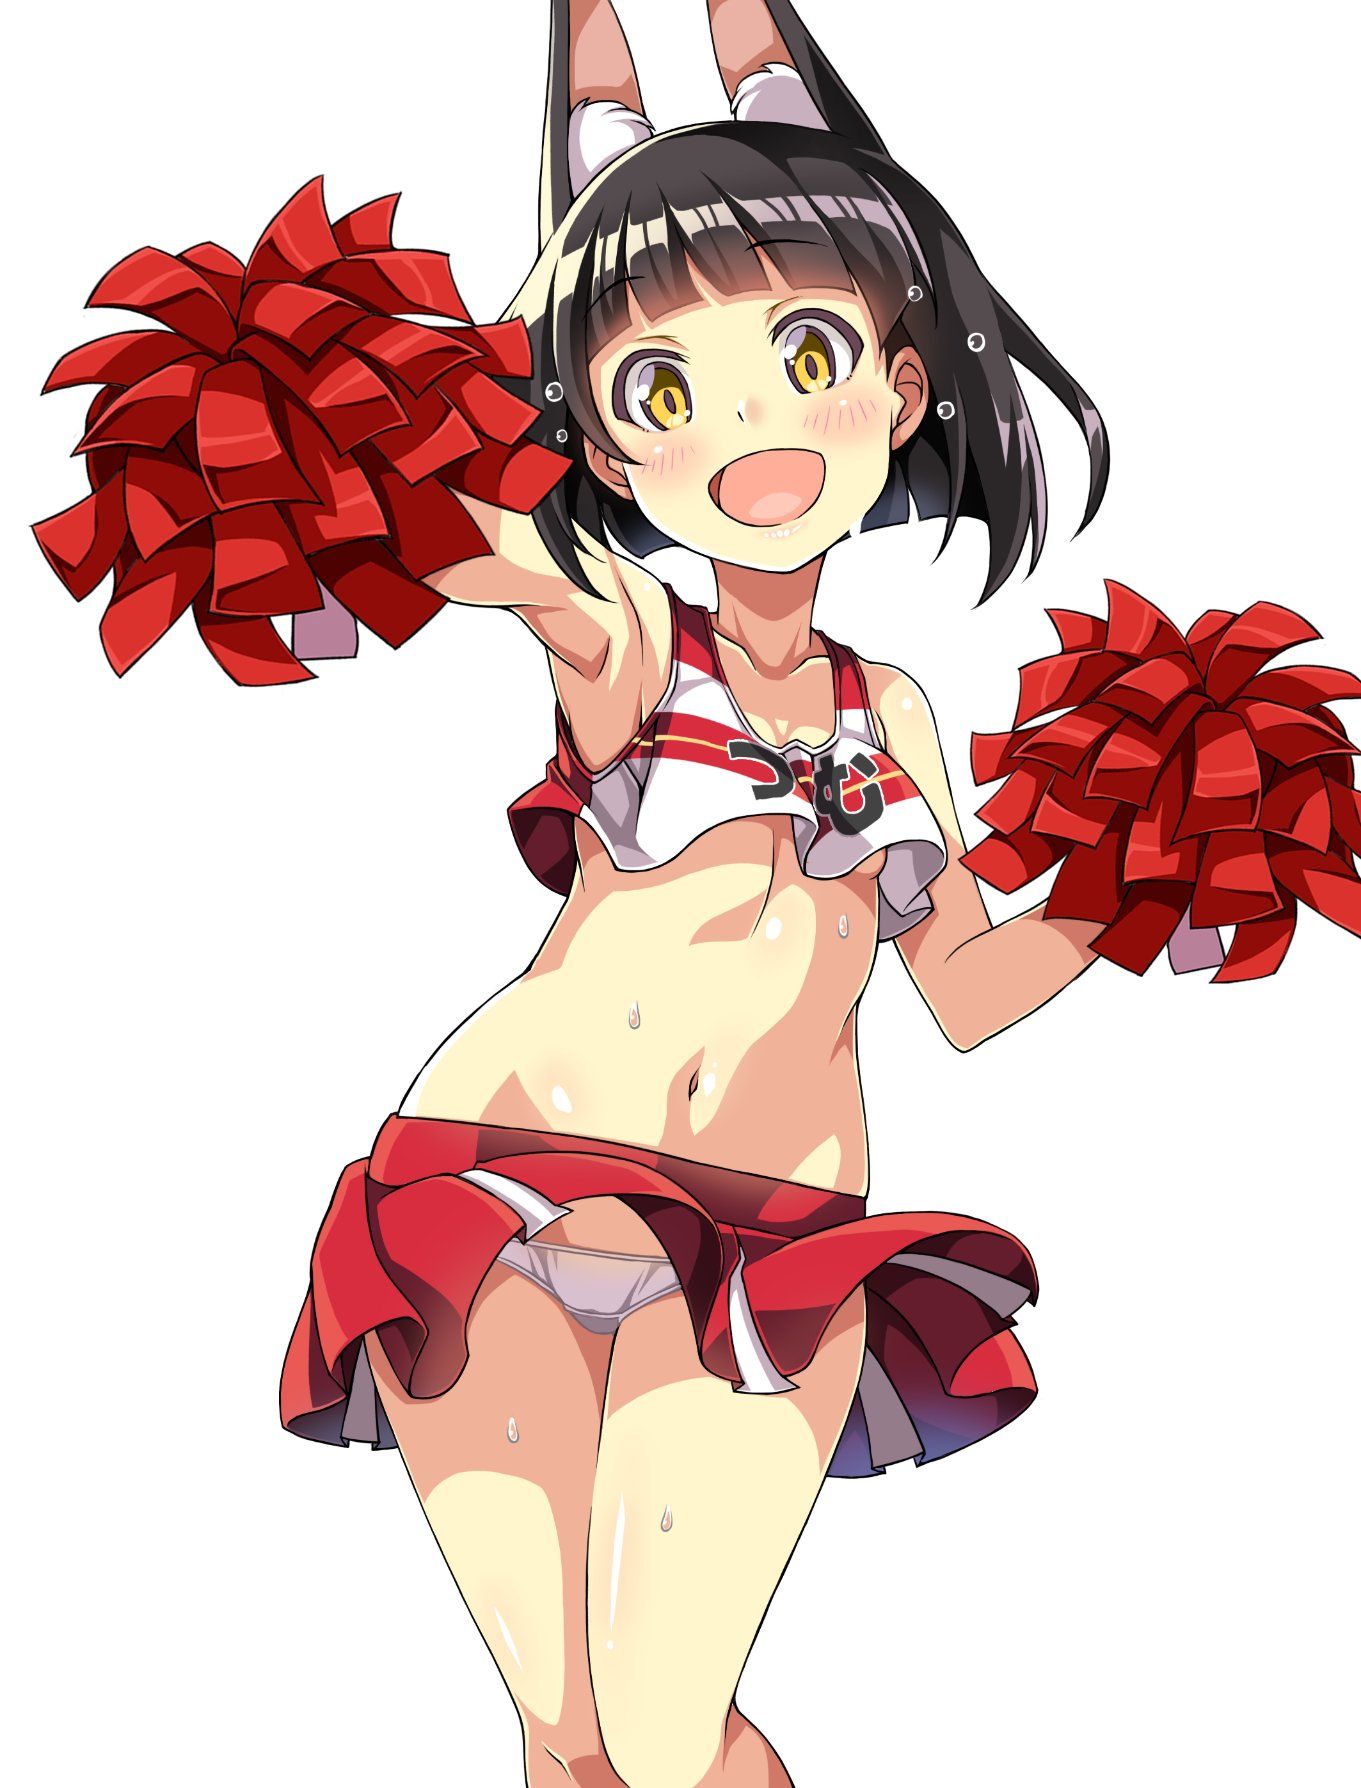 【Mutsu-chan (Azulen)】Secondary erotic image of Azur Lane's black-haired short heavy cherry blossom loli priestess sister ship Mutsu-chan 7